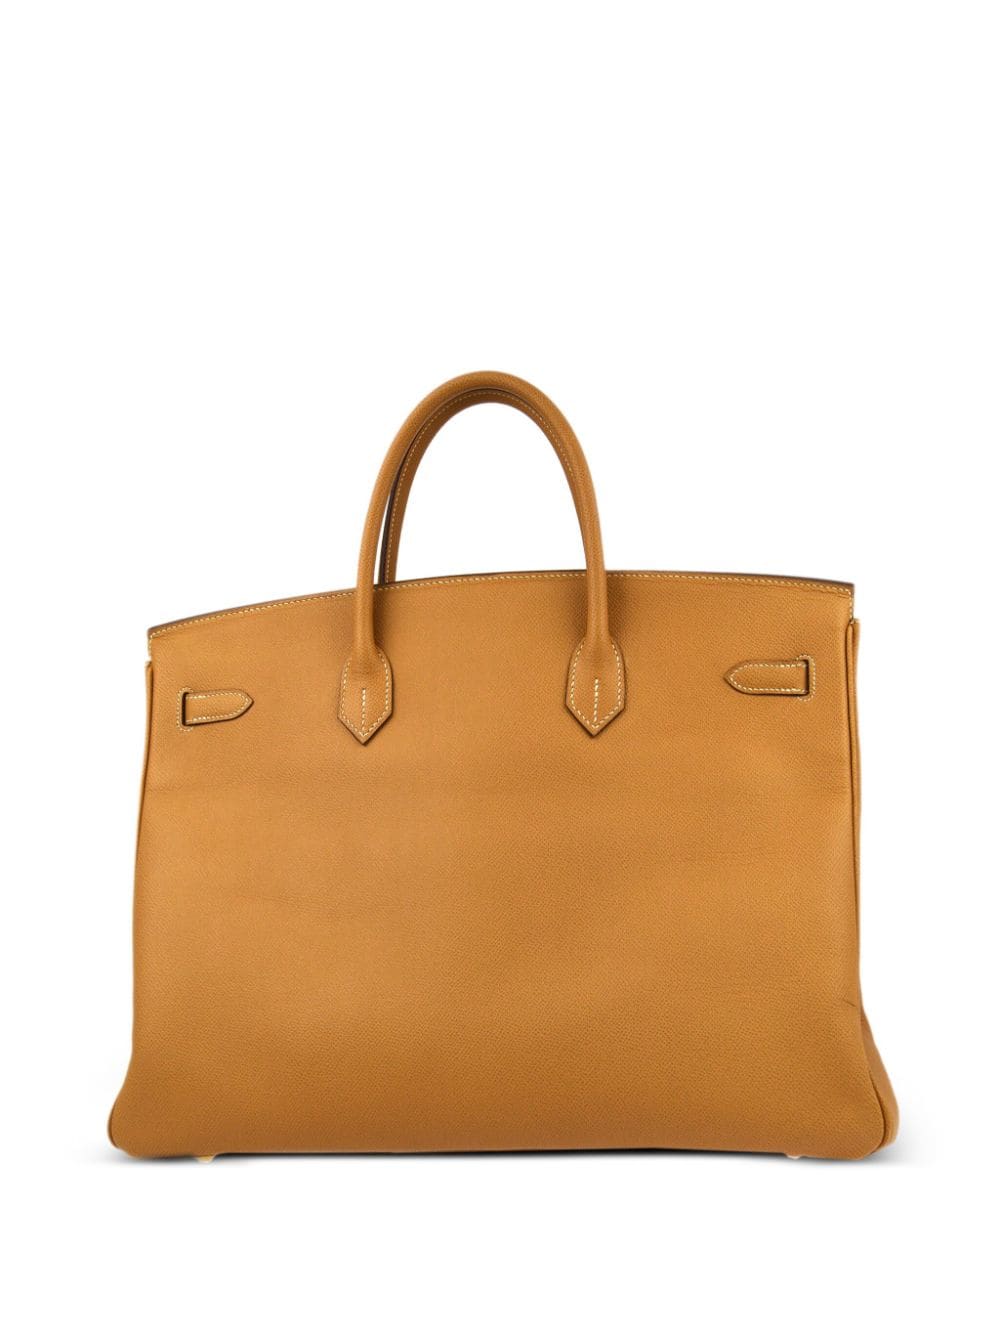 Hermès Pre-Owned 2005 Birkin 40 handbag - Beige